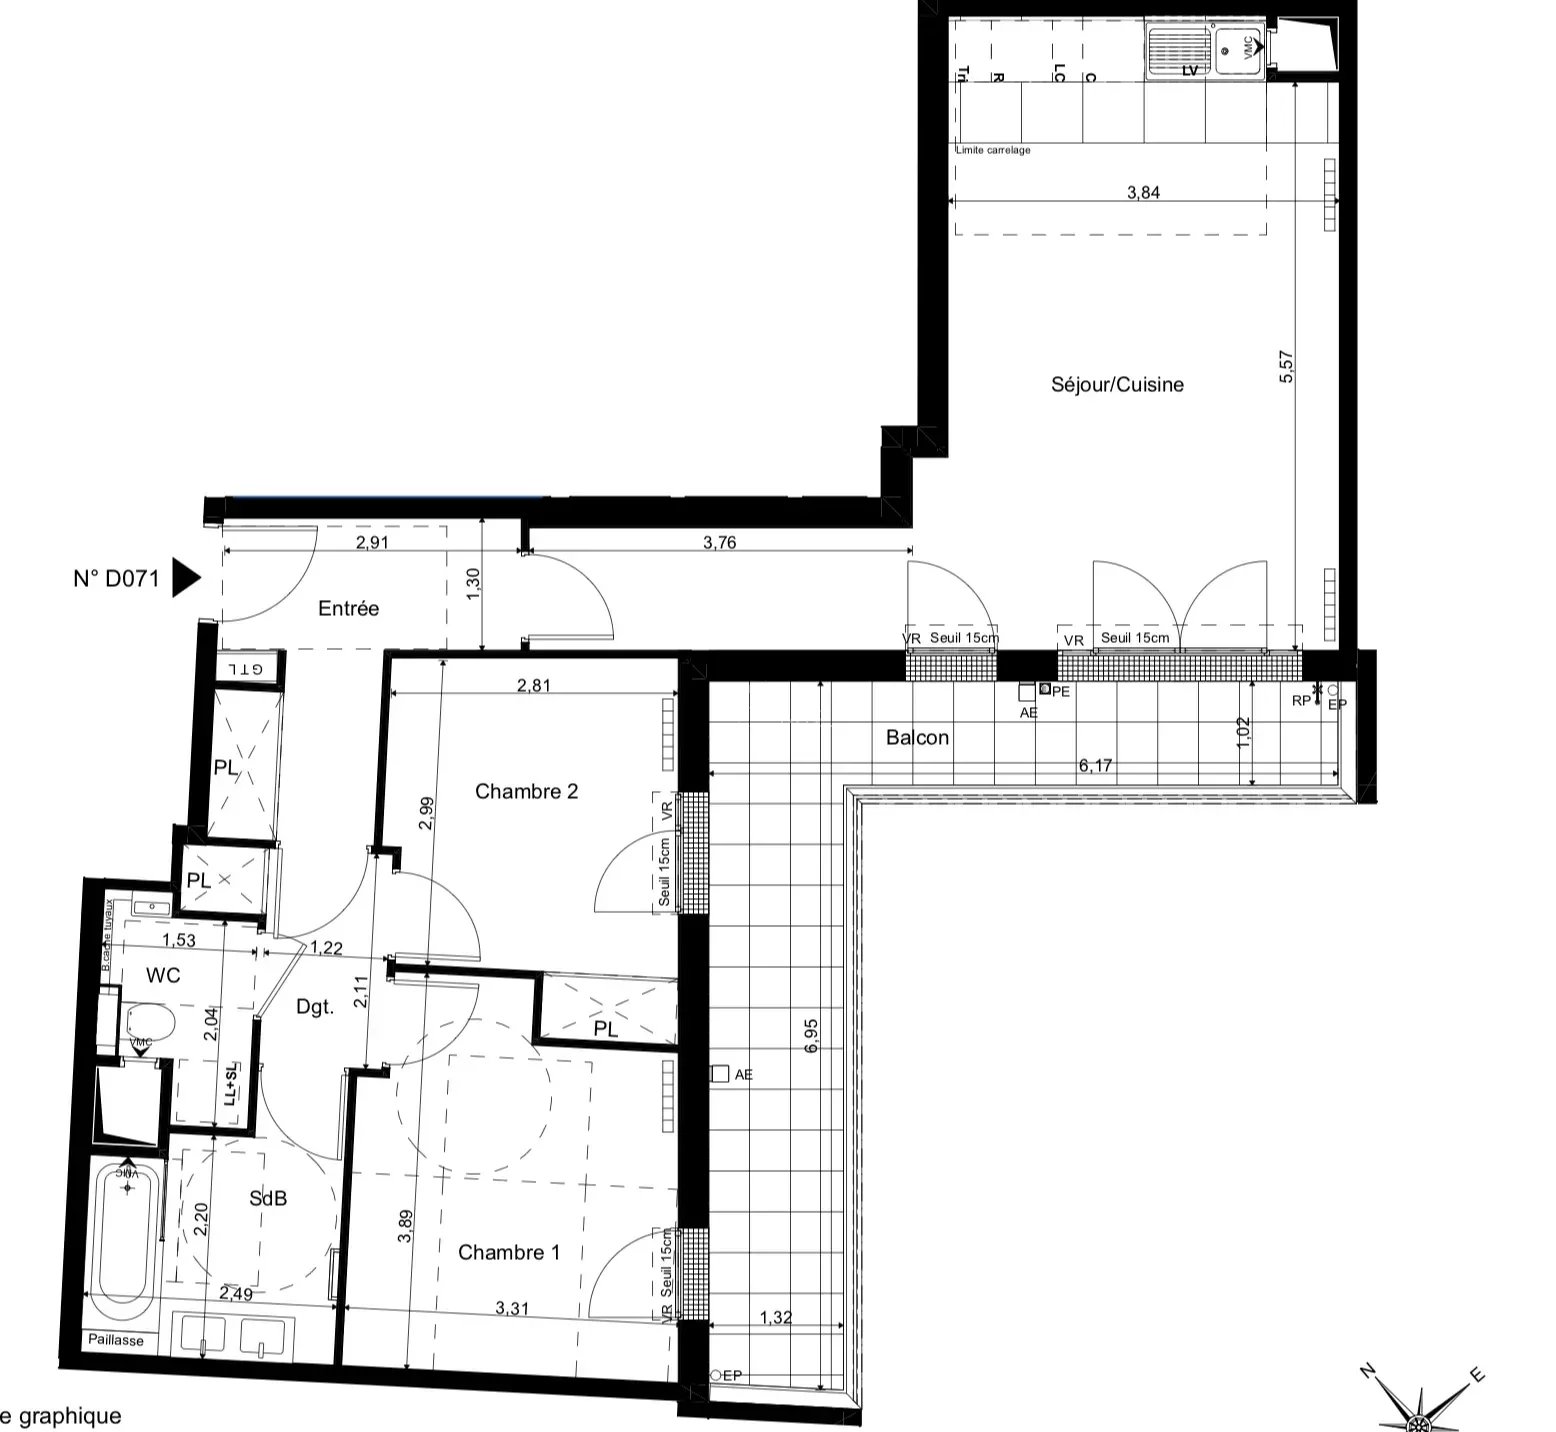 For Sale - New Development - 2-Bedroom Apartment - Suresnes (92)